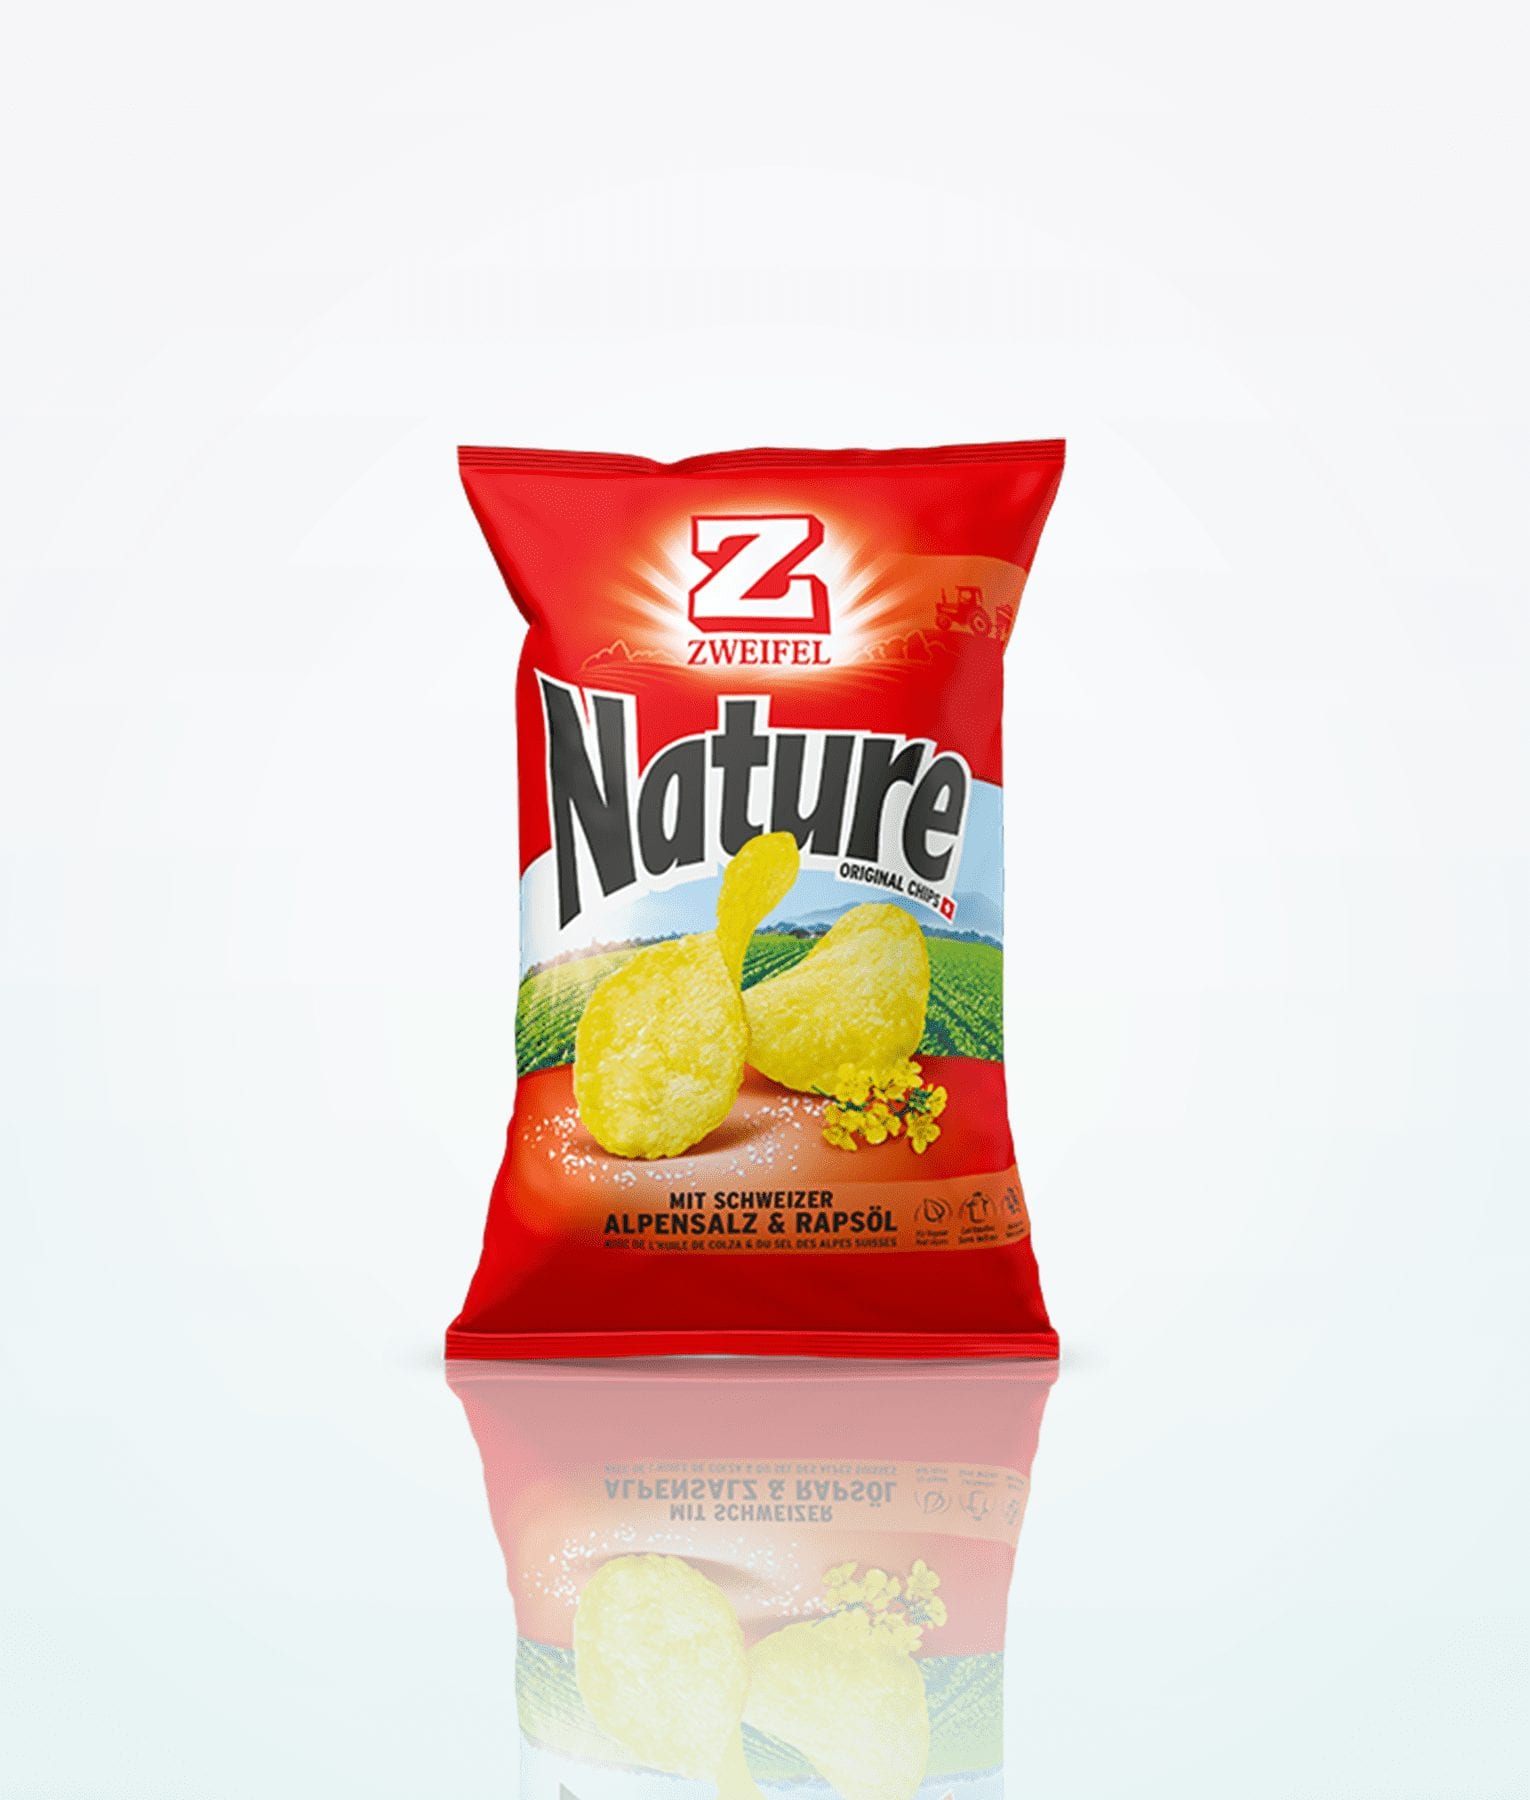 Zweifel Nature Original Chips 185g